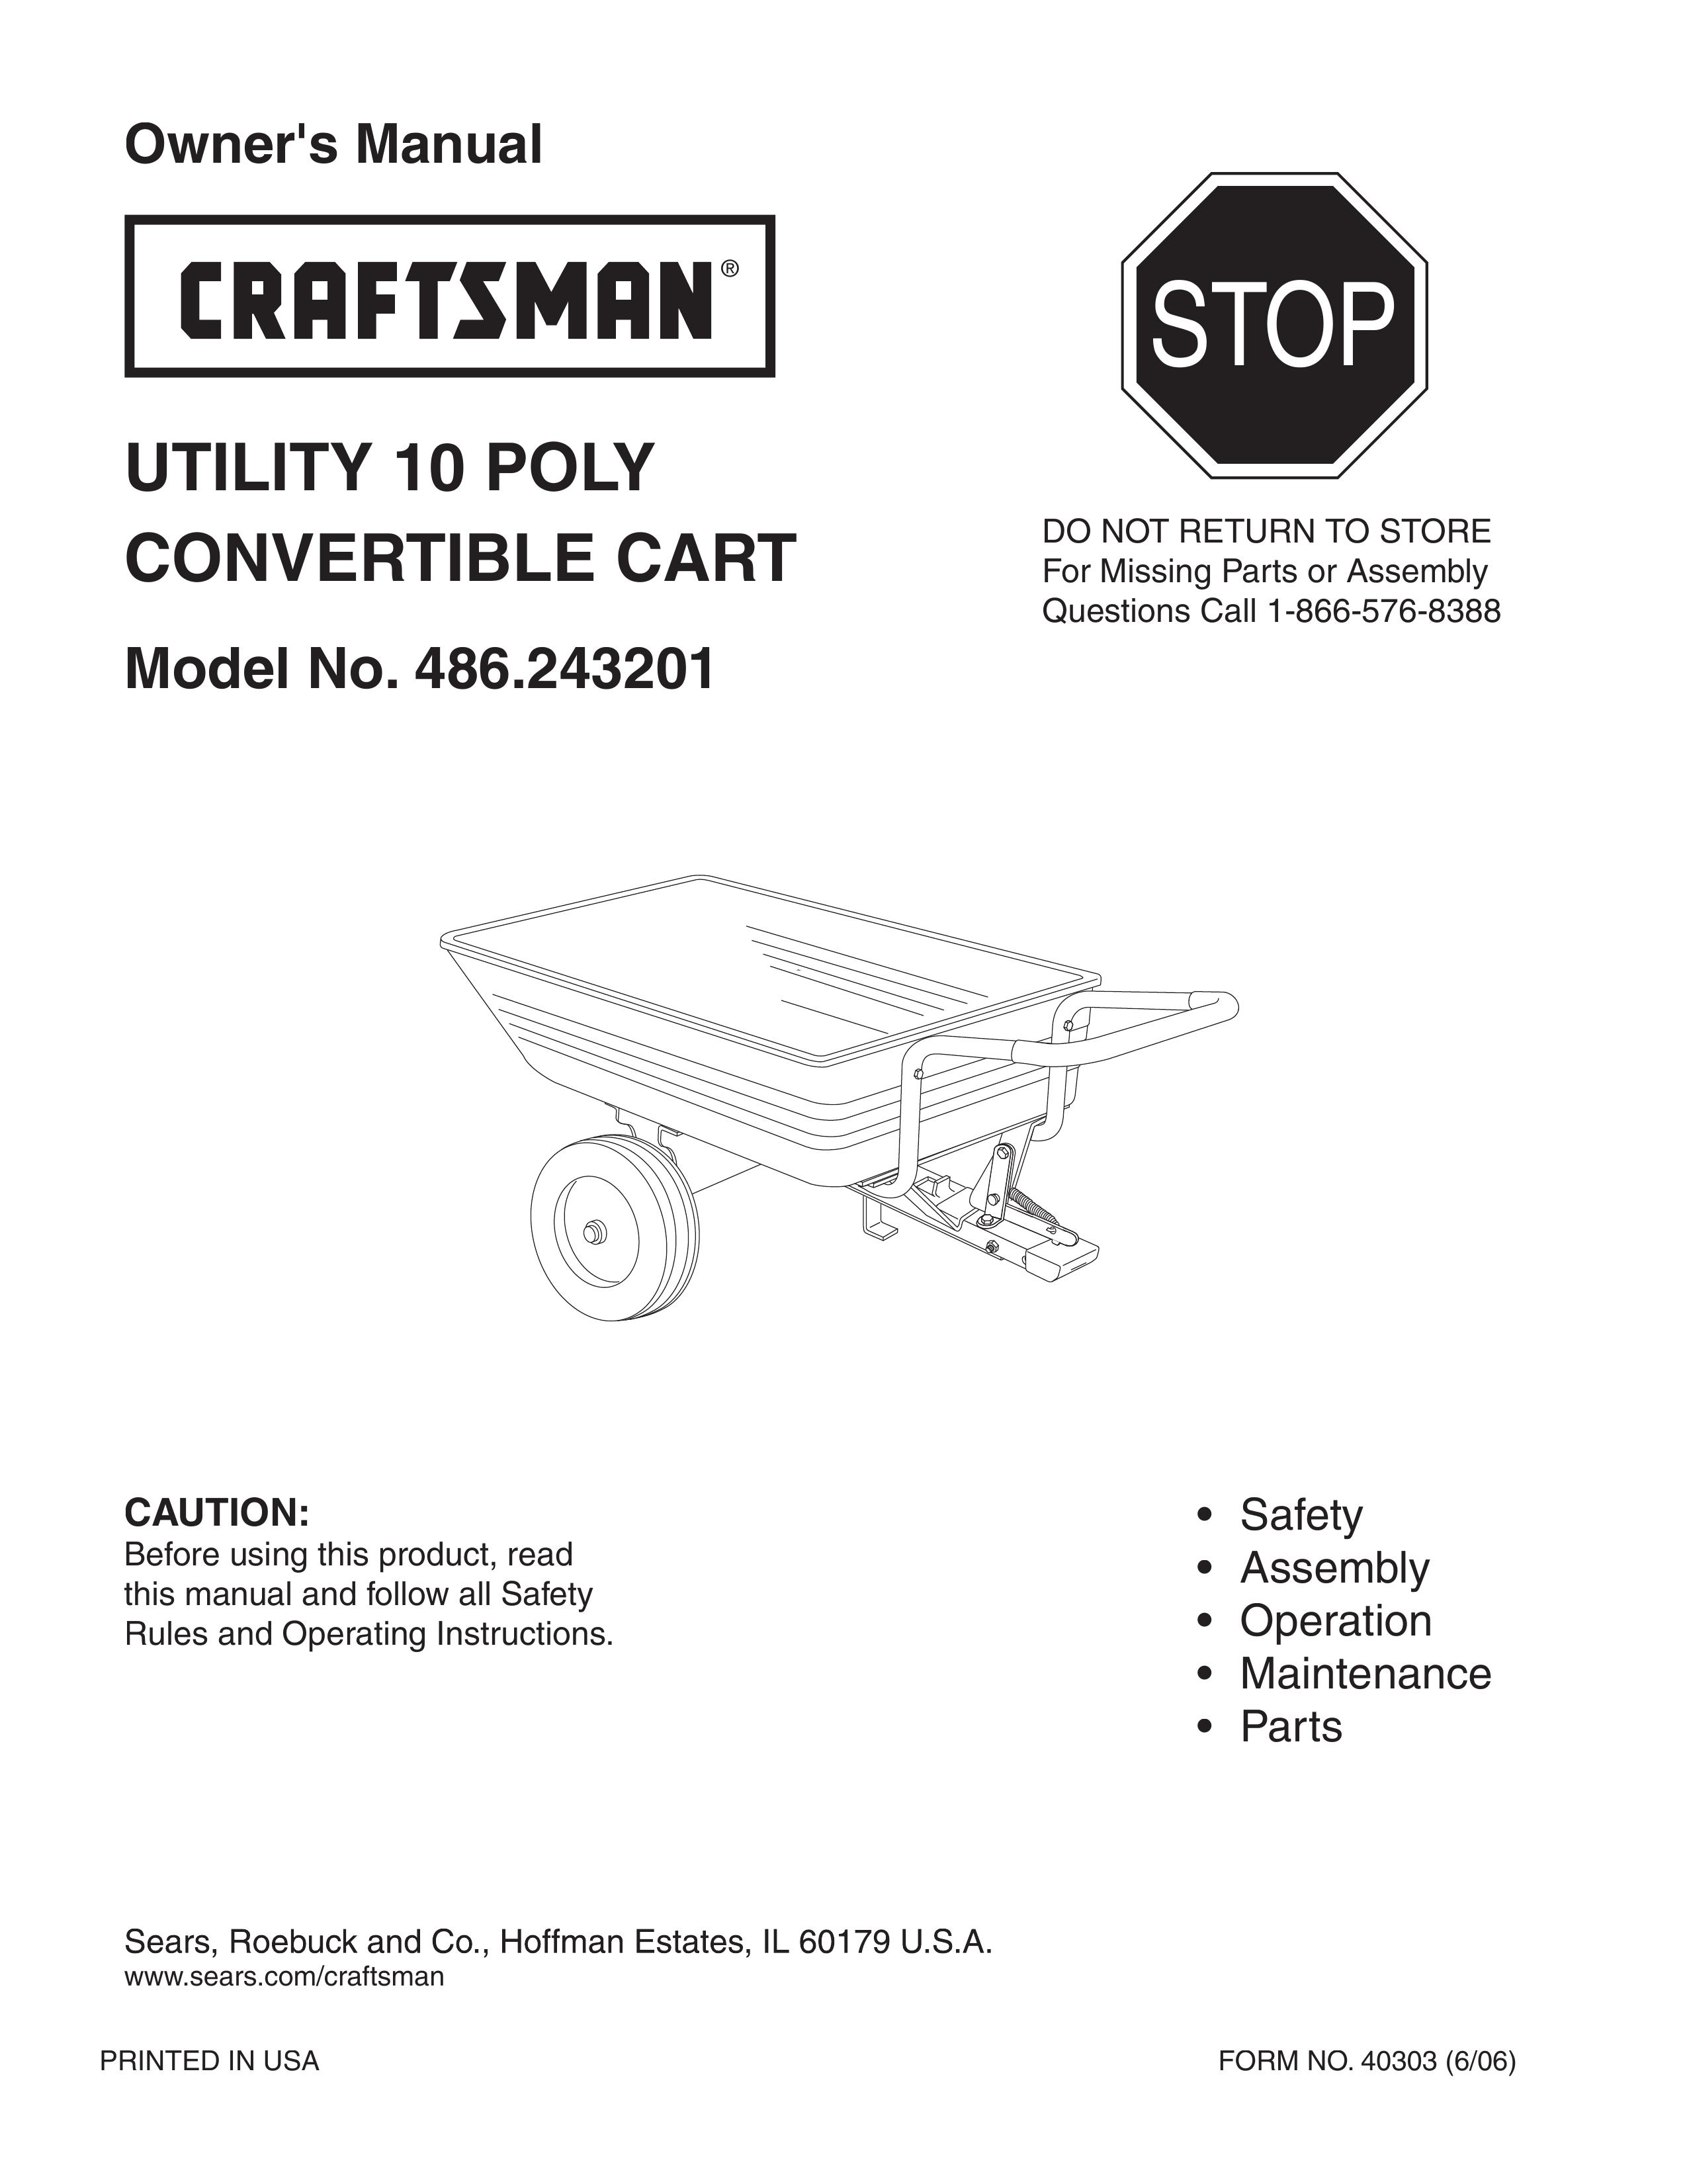 Craftsman 486.243201 Outdoor Cart User Manual